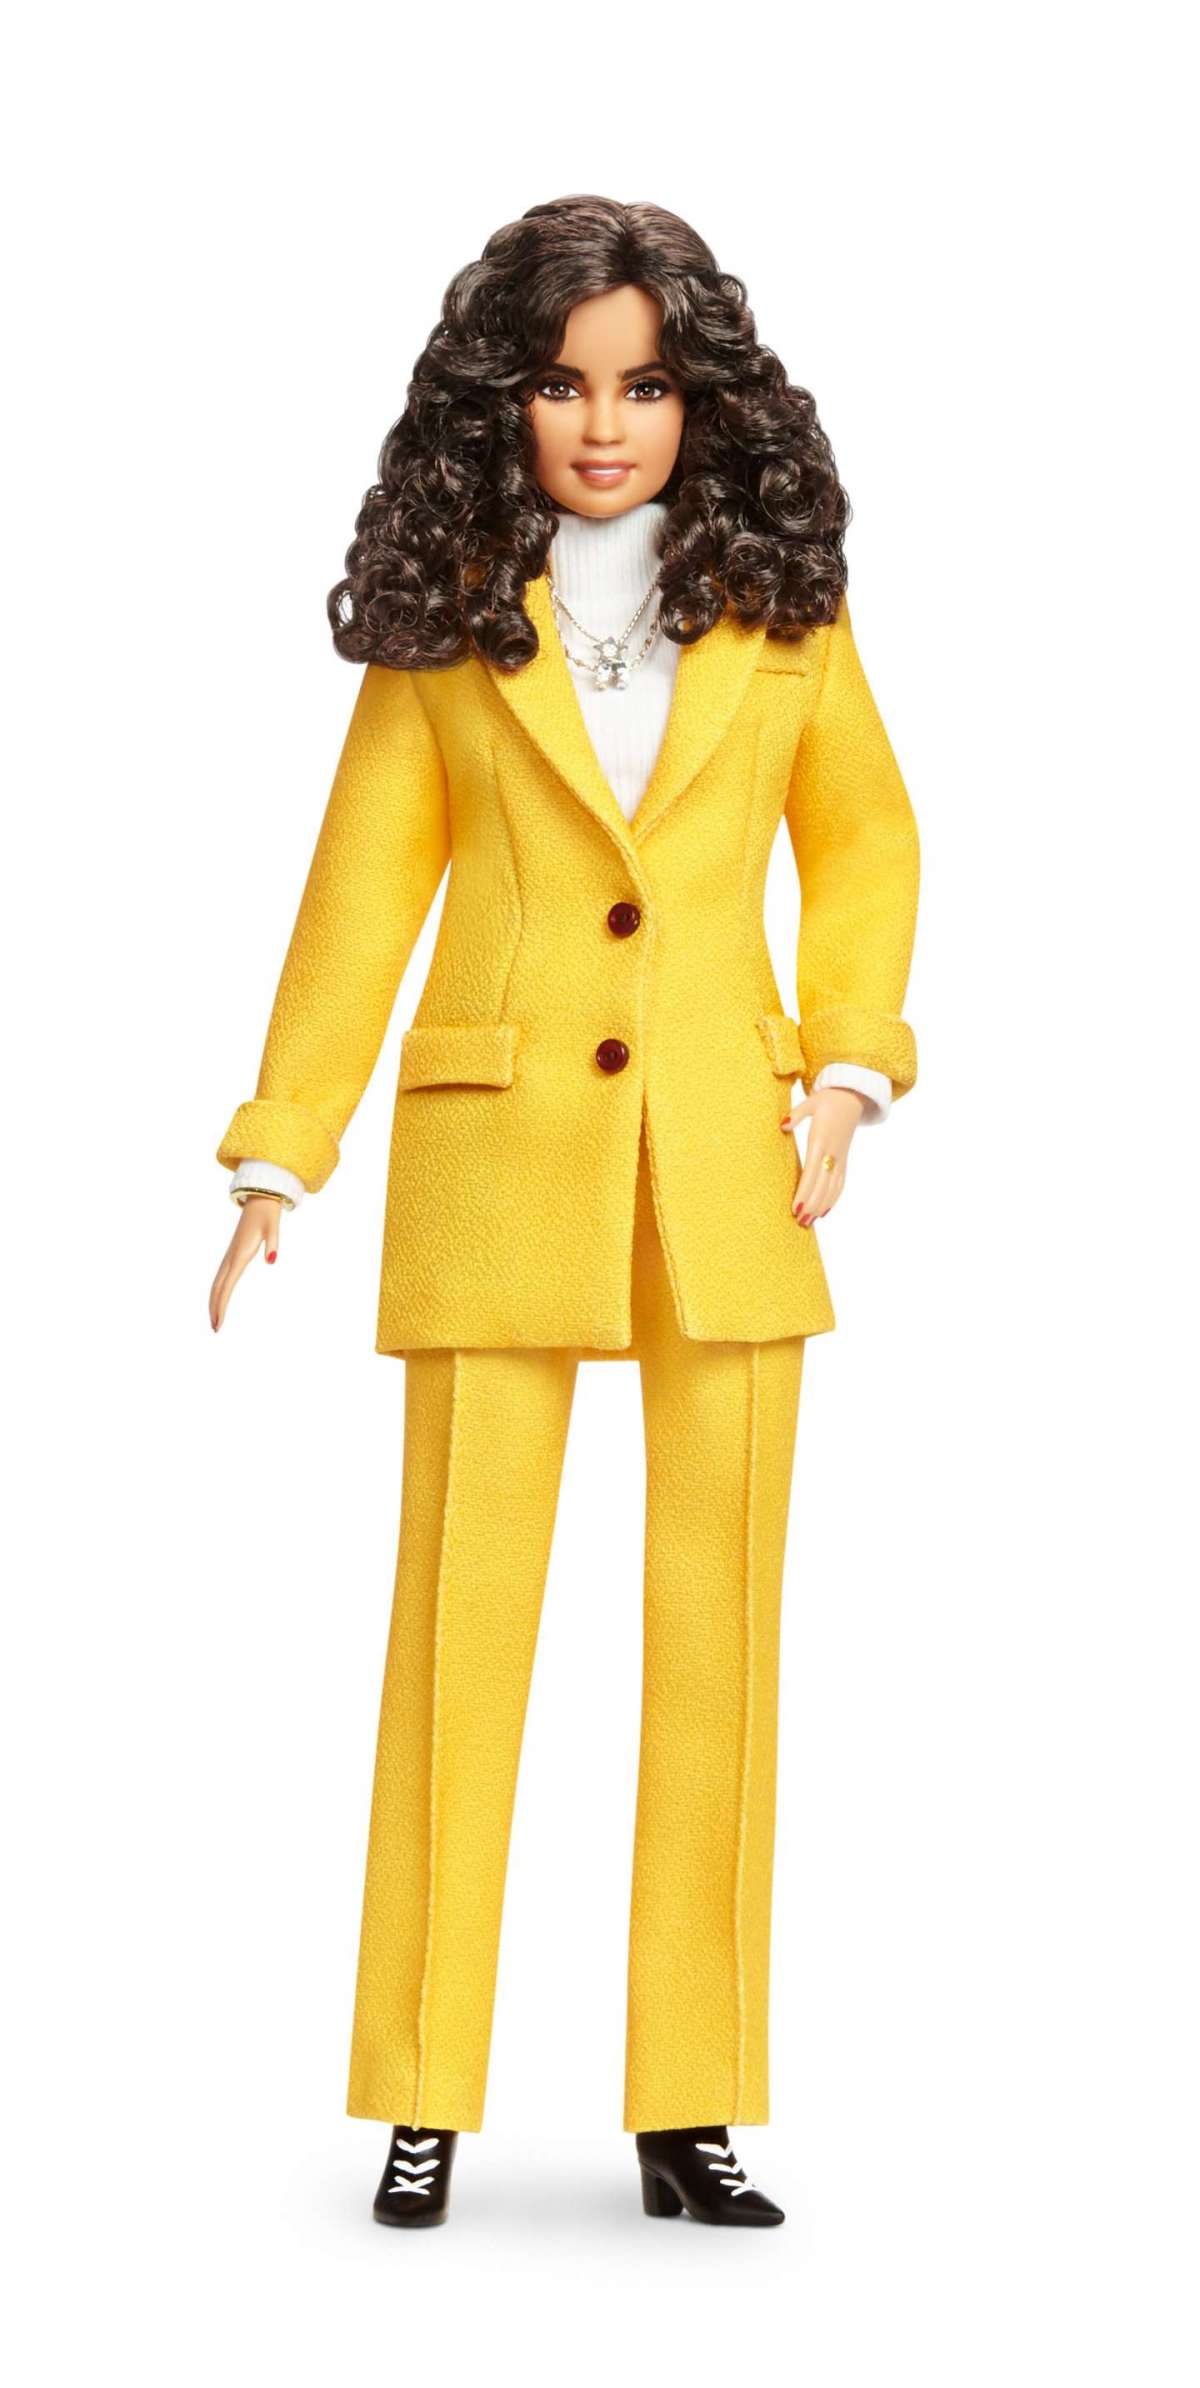 Leyla Piedayesh, la Barbie imprenditrice